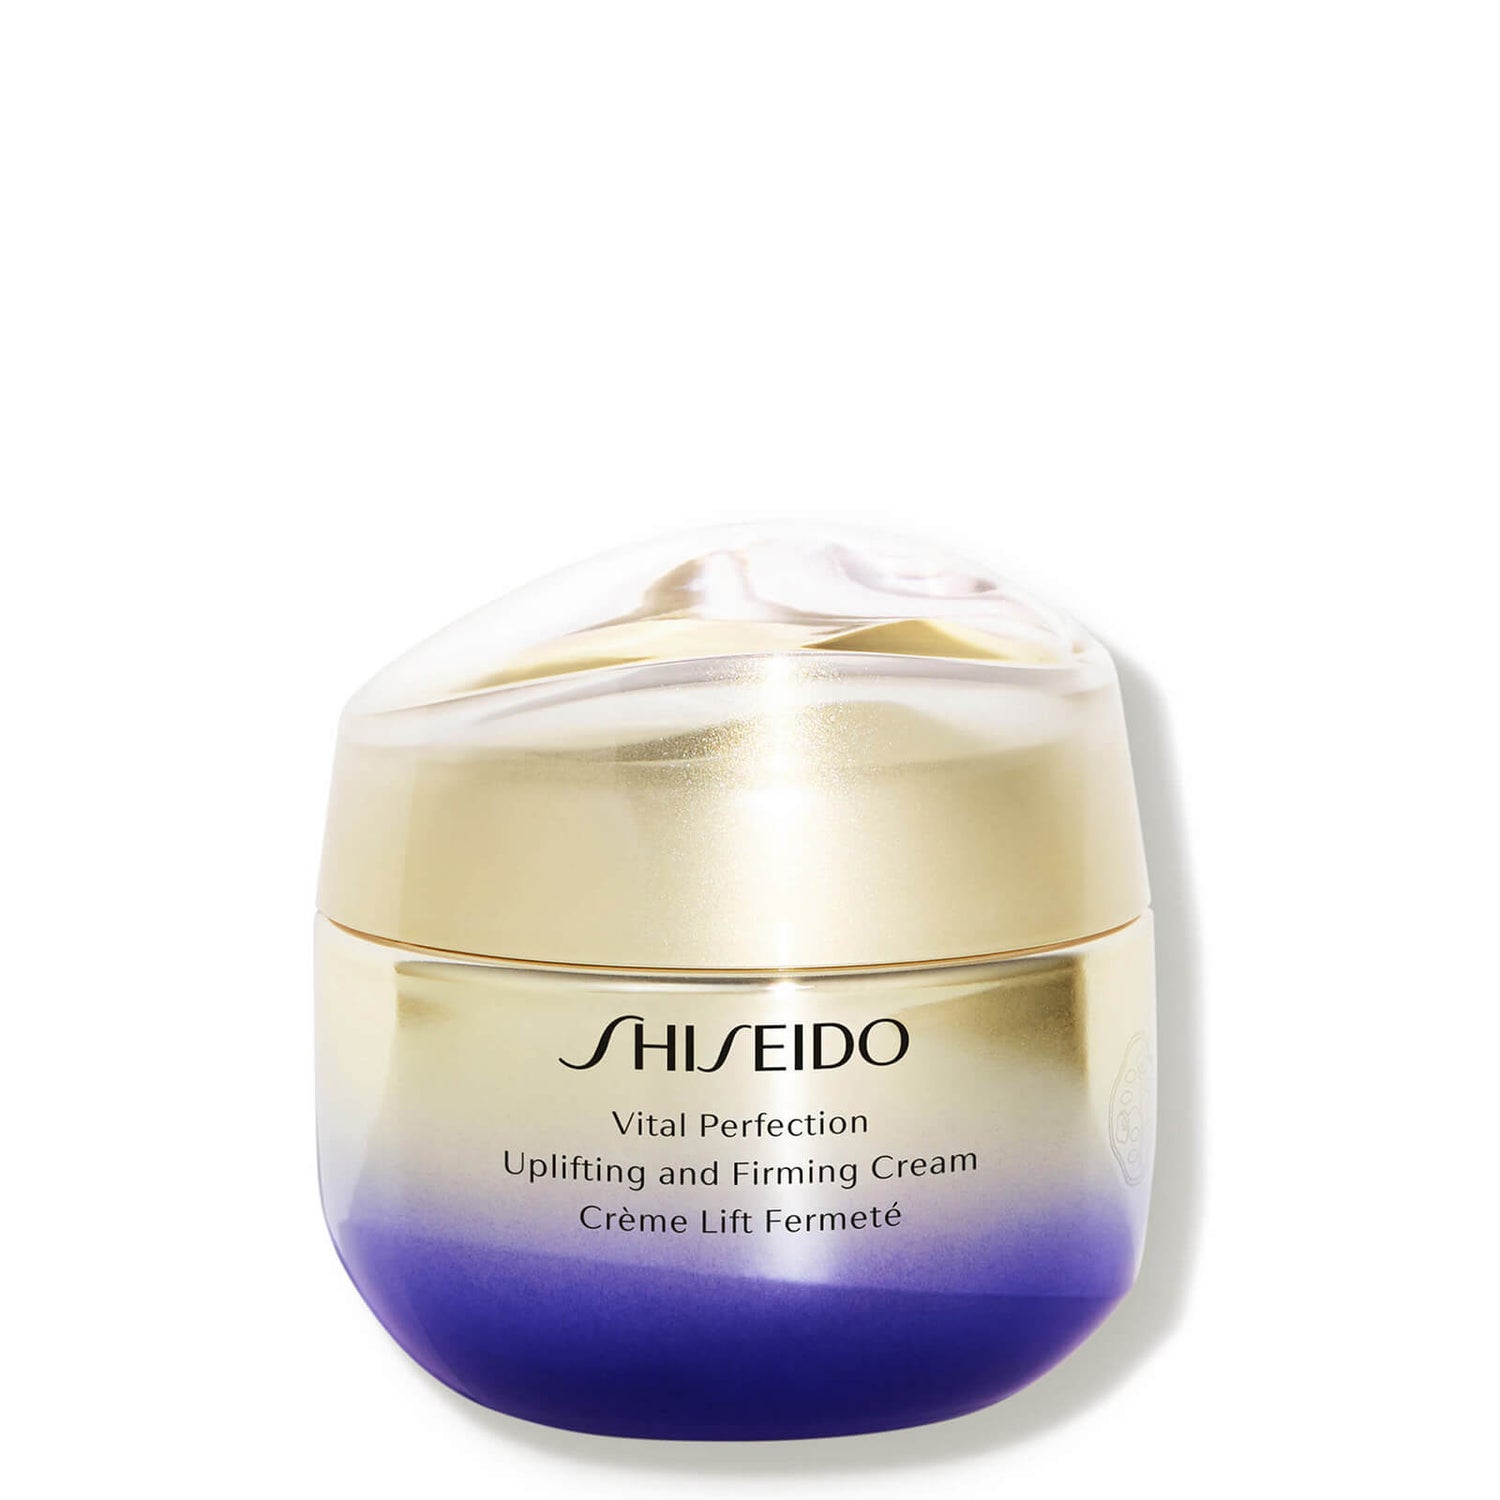 Shiseido Vital Perfection Uplifting and Firming Cream (50 ml.)